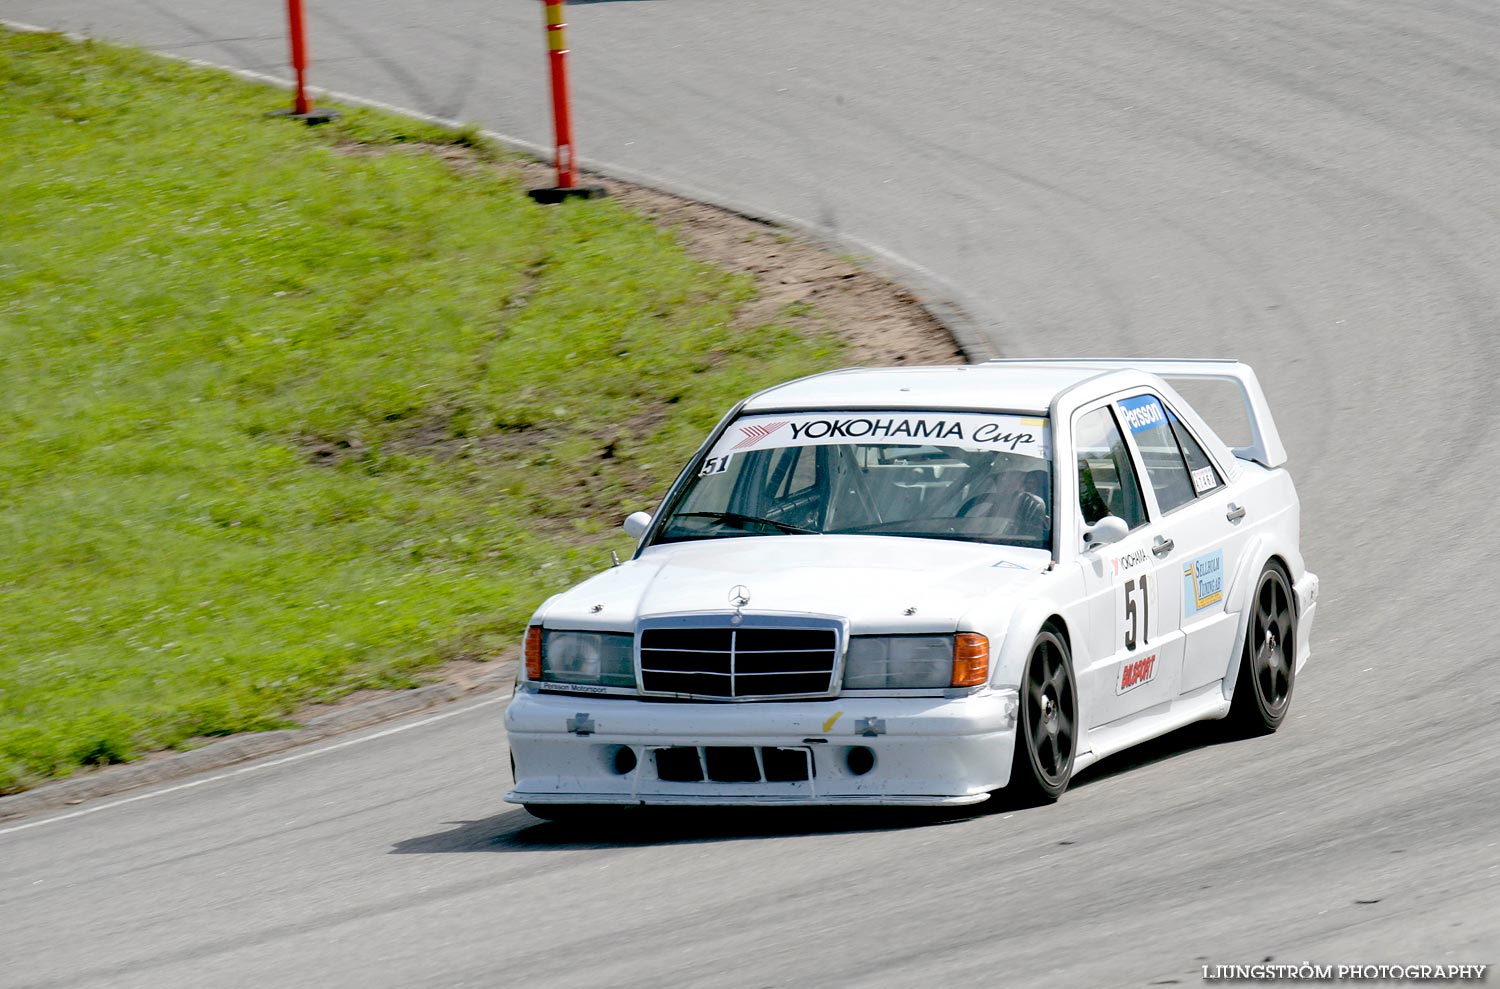 SSK Raceweek,mix,Kinnekulle Ring,Götene,Sverige,Motorsport,,2009,107540